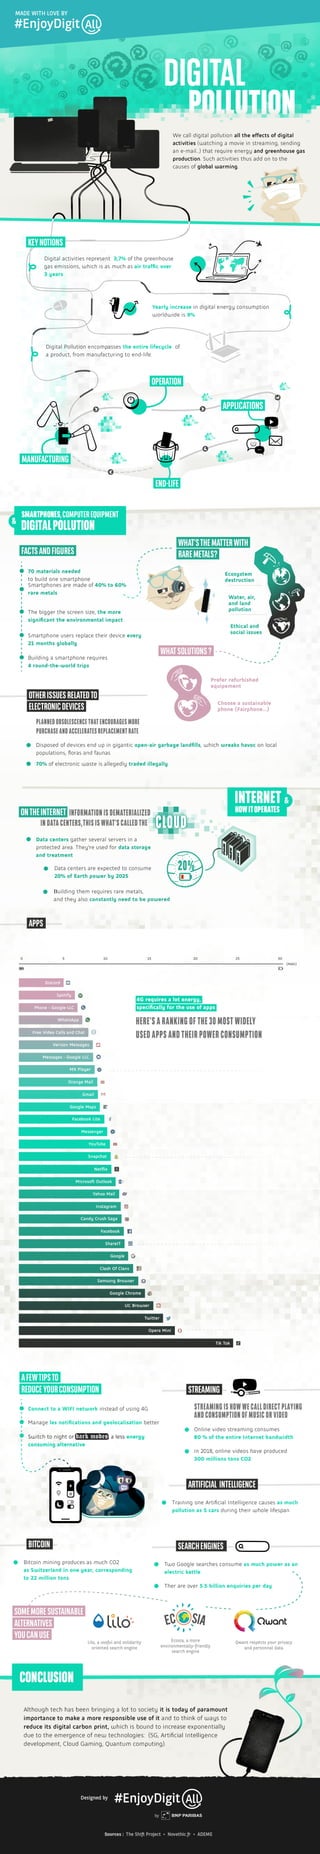 Digital Pollution - an Infographic by EnjoyDigitAll